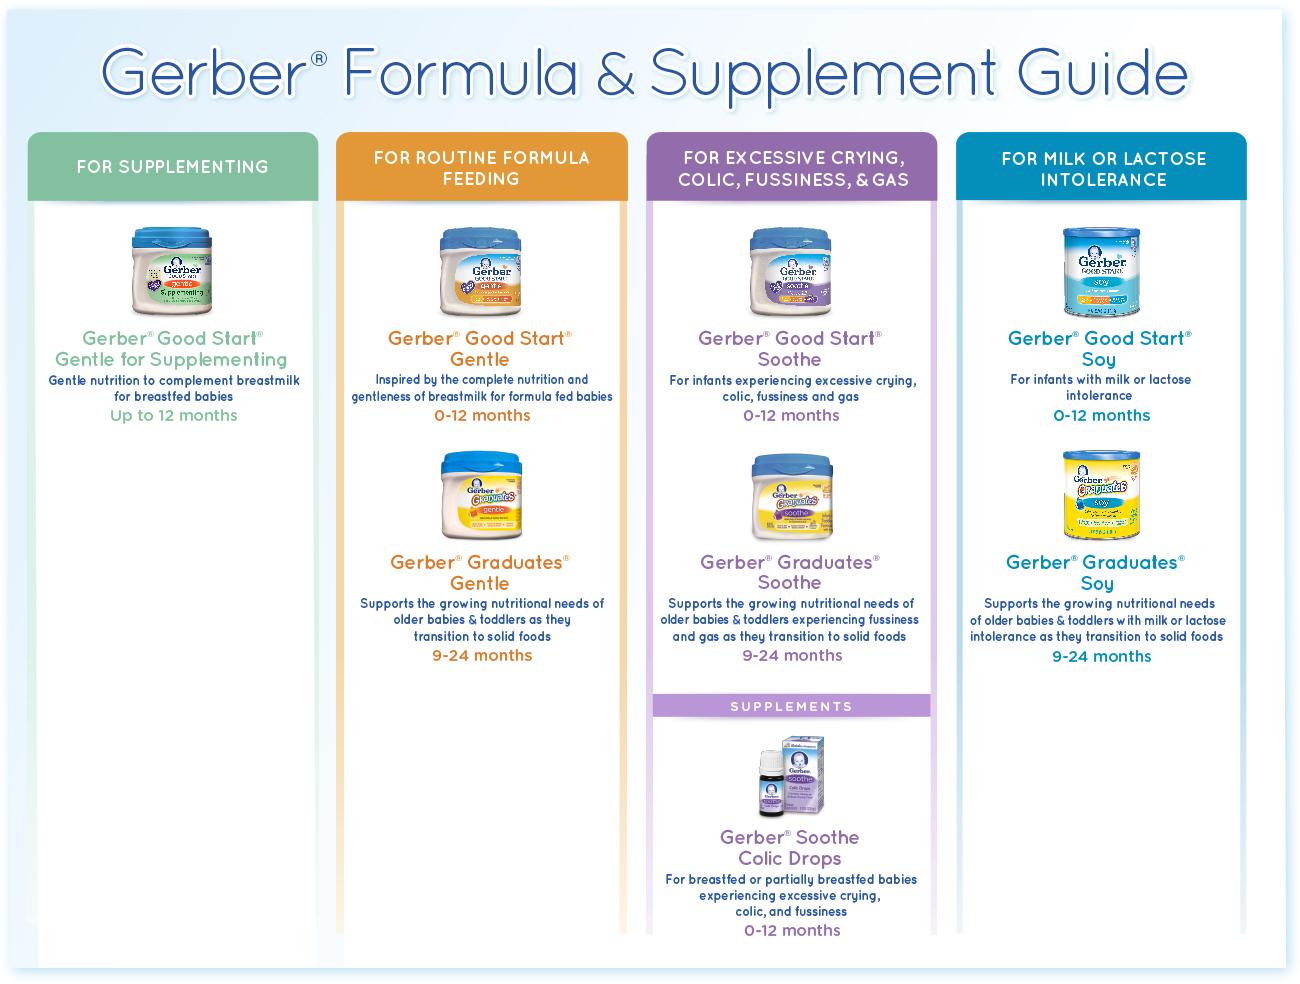 Gerber Good Start Gentle Powder Infant Formula, 23.2 Ounce: Amazon 